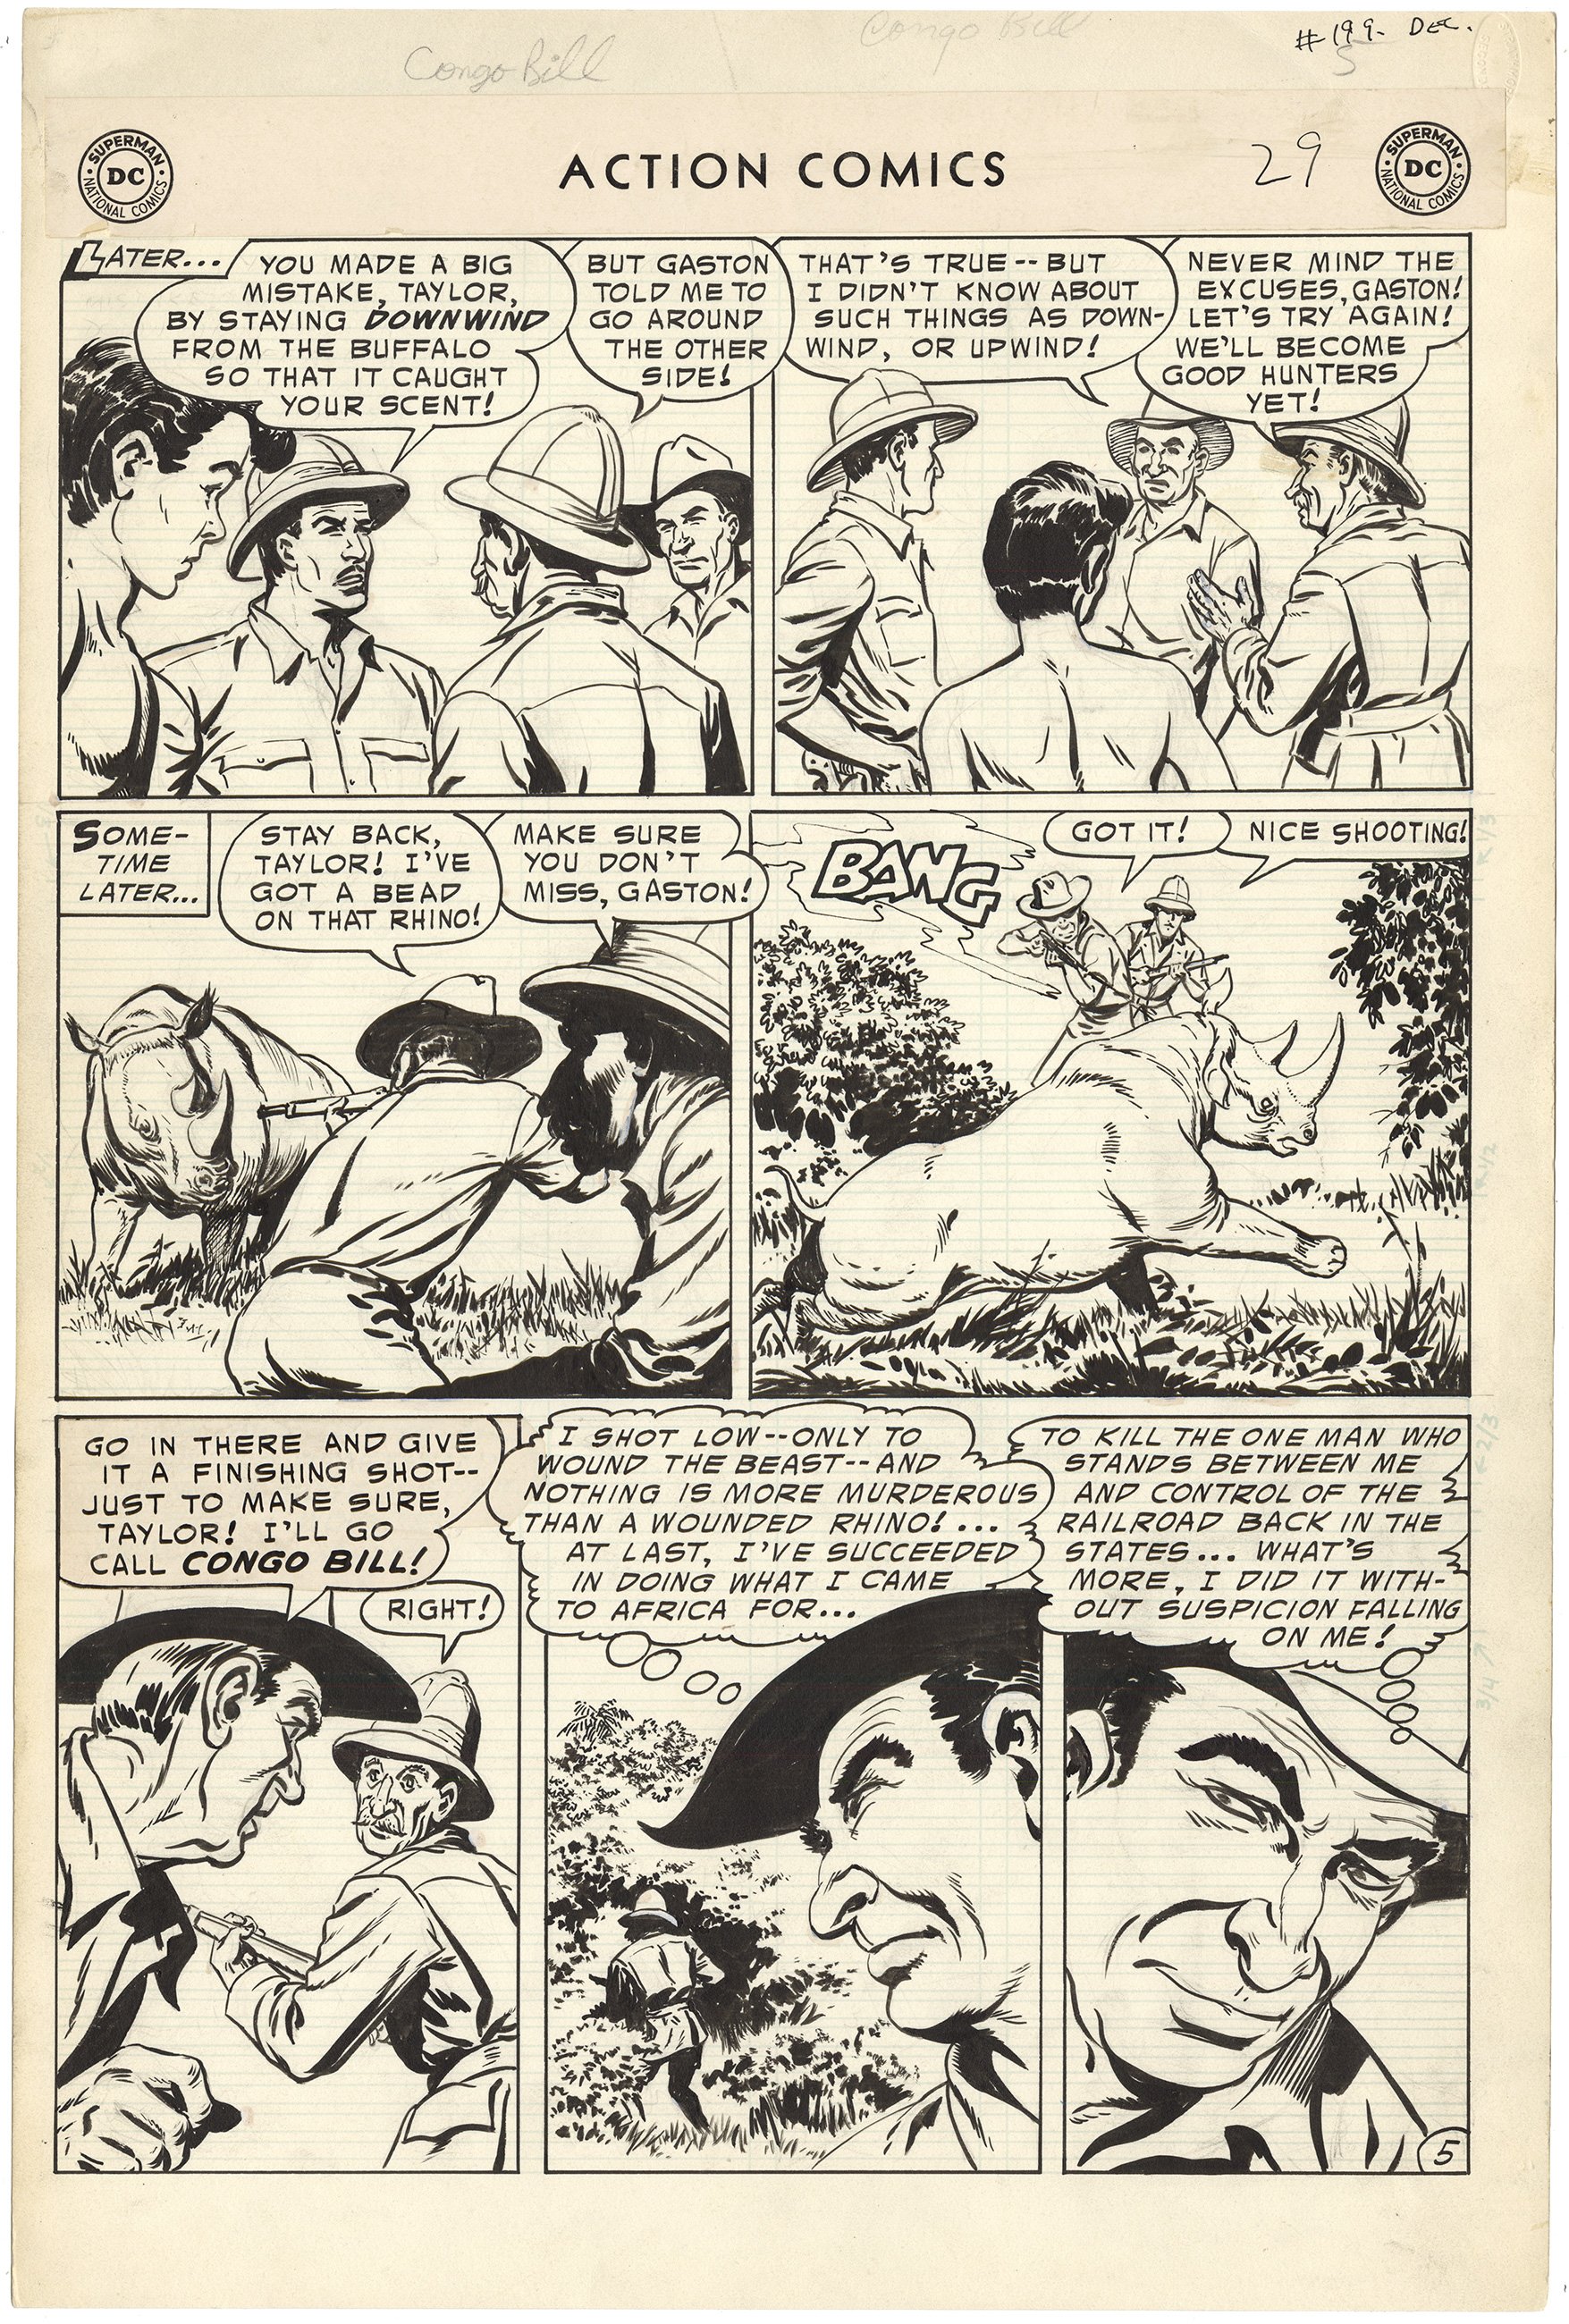 Action Comics #199 p5 (Large Art)(Congo Bill)